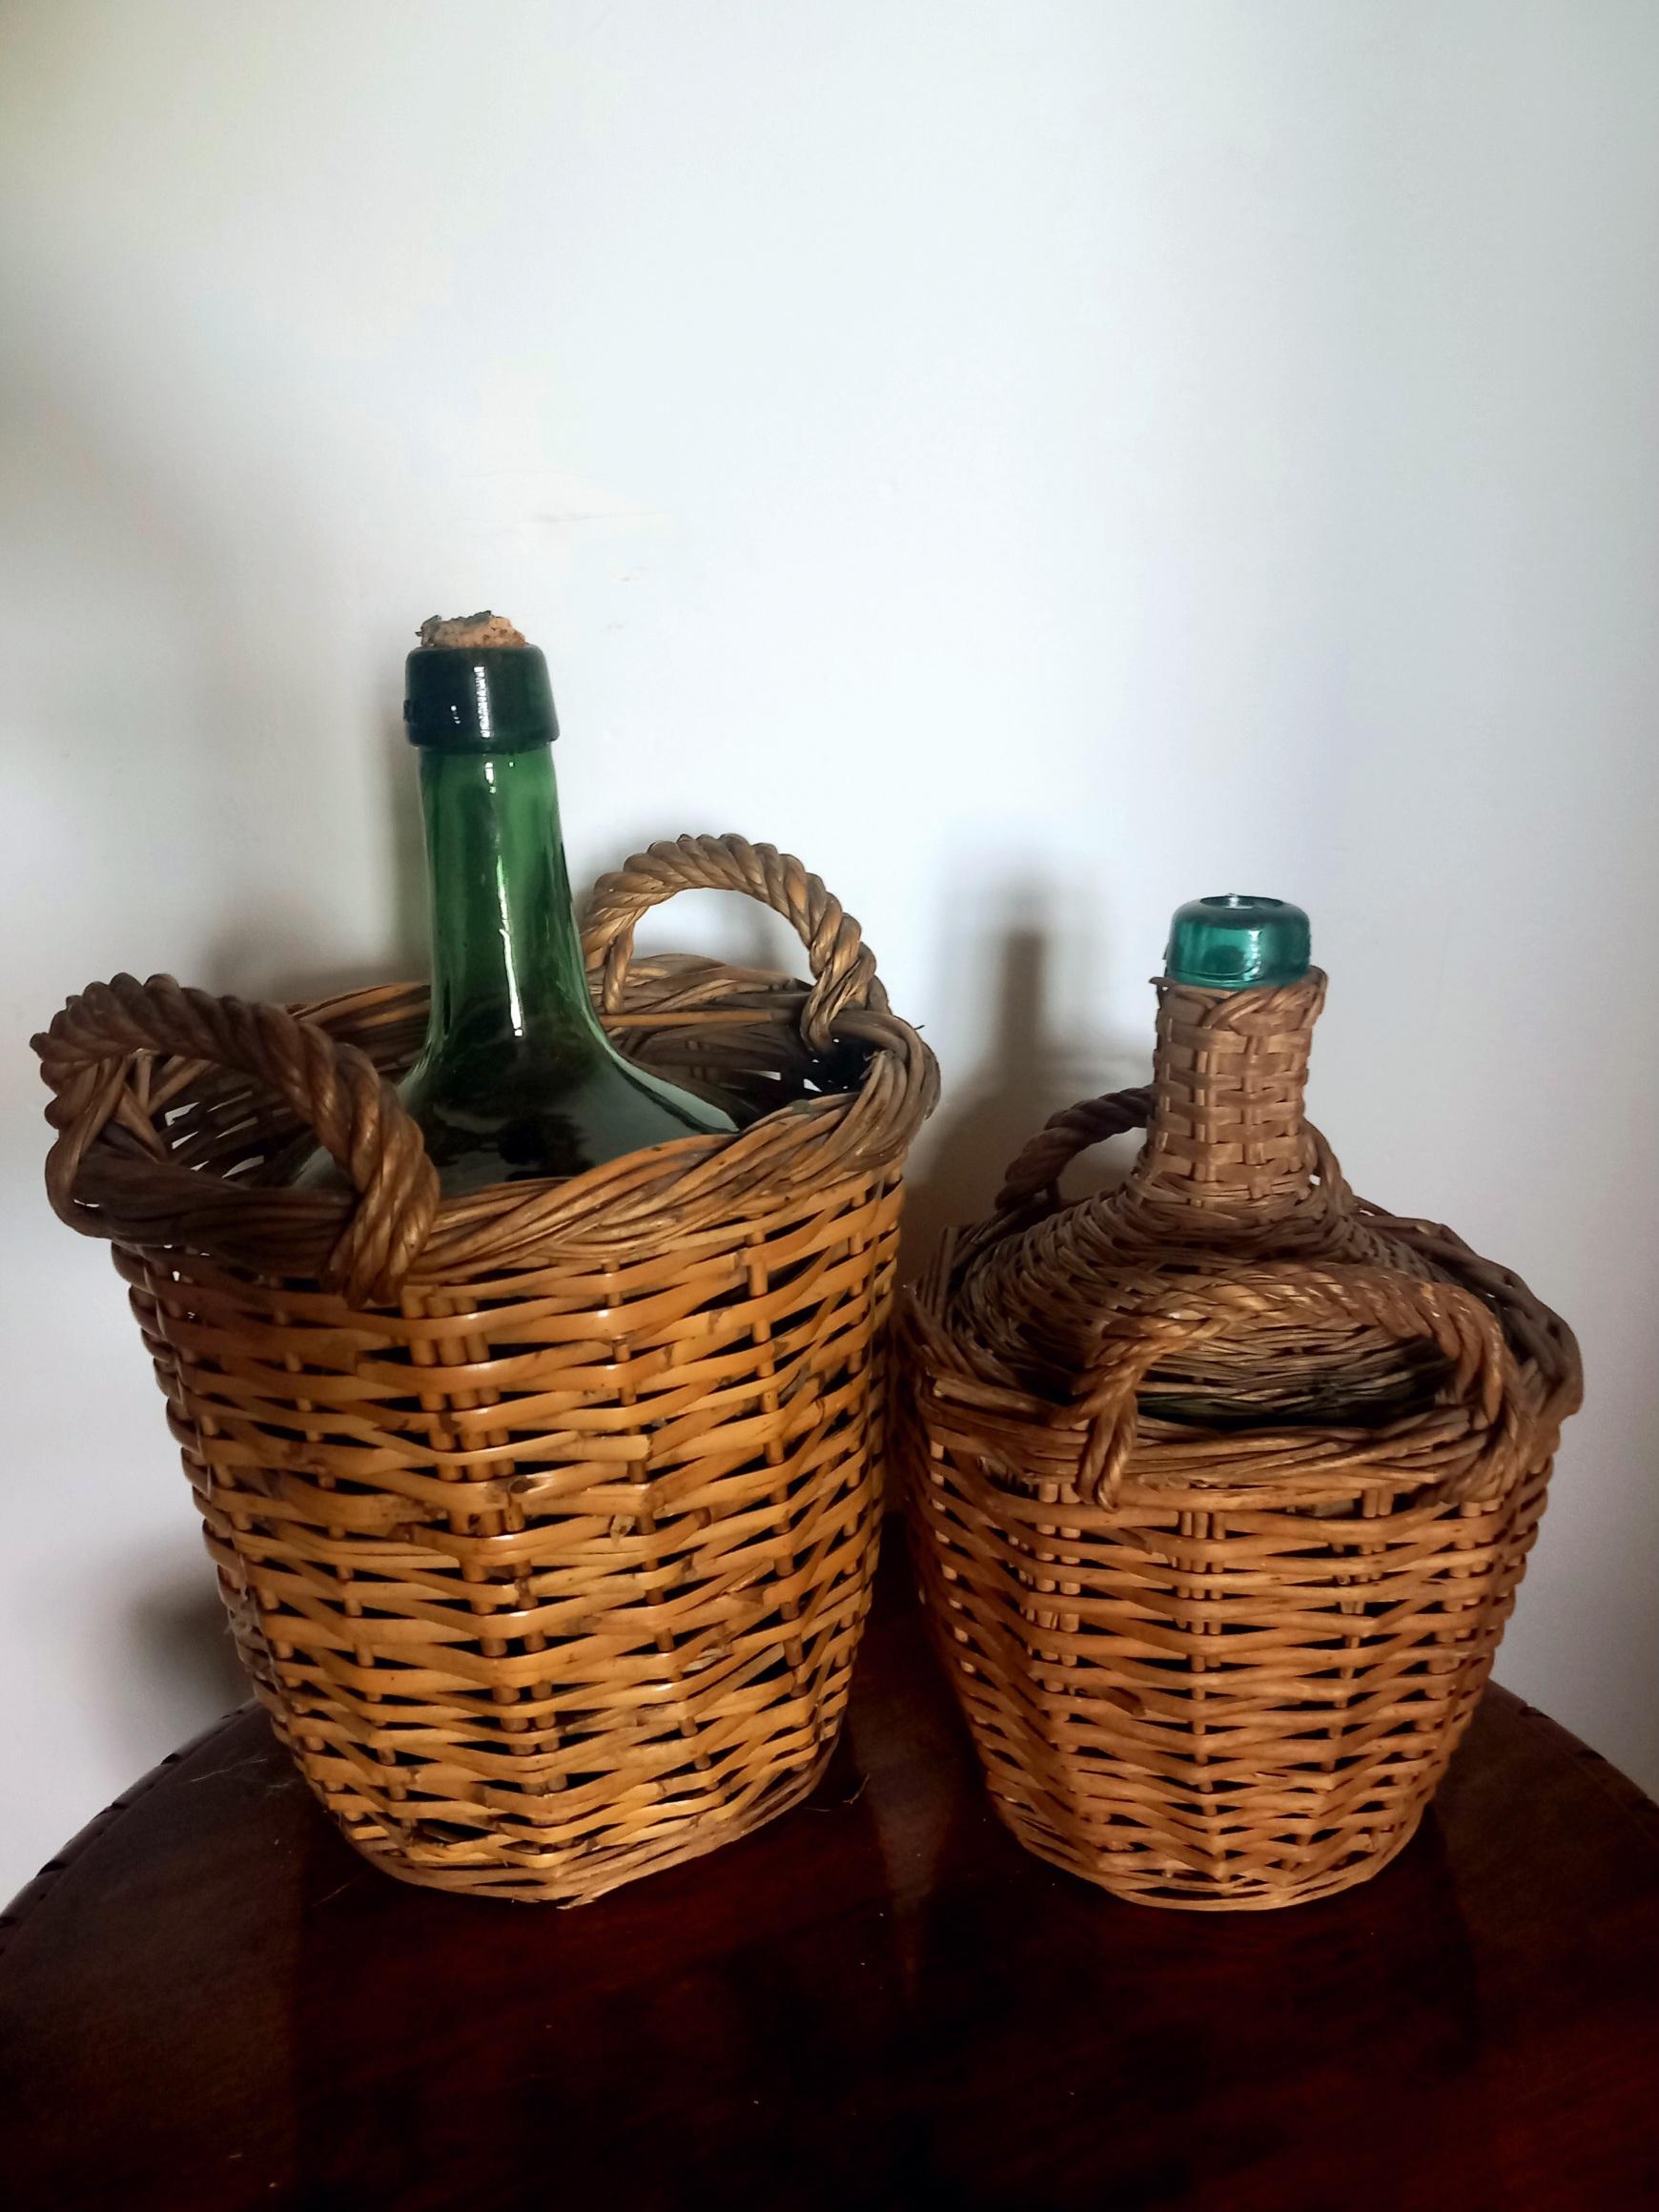  Wine Bottle Coolers Glass Wicker Spain Early 20th Century For Sale 3